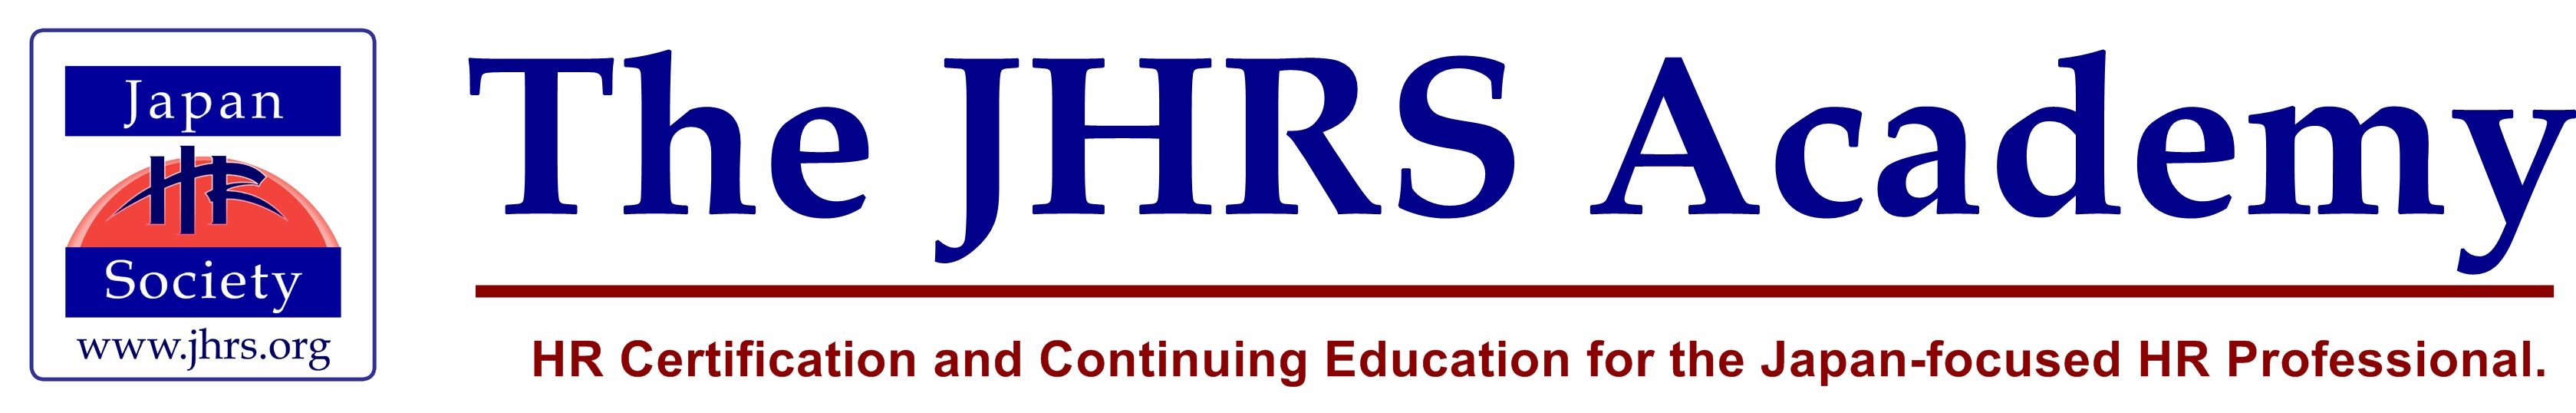 JHRA Academy Logo1.jpg